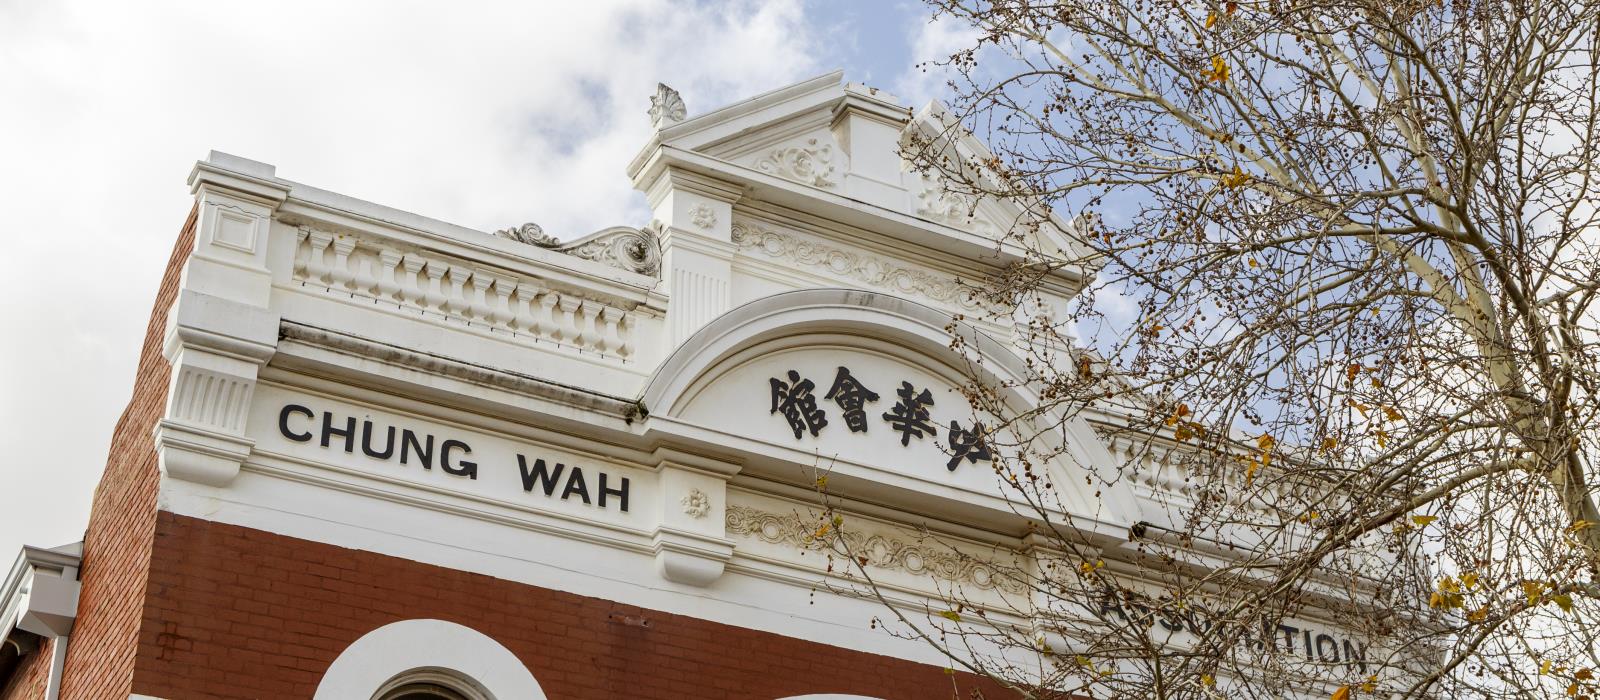 Chung wah hall